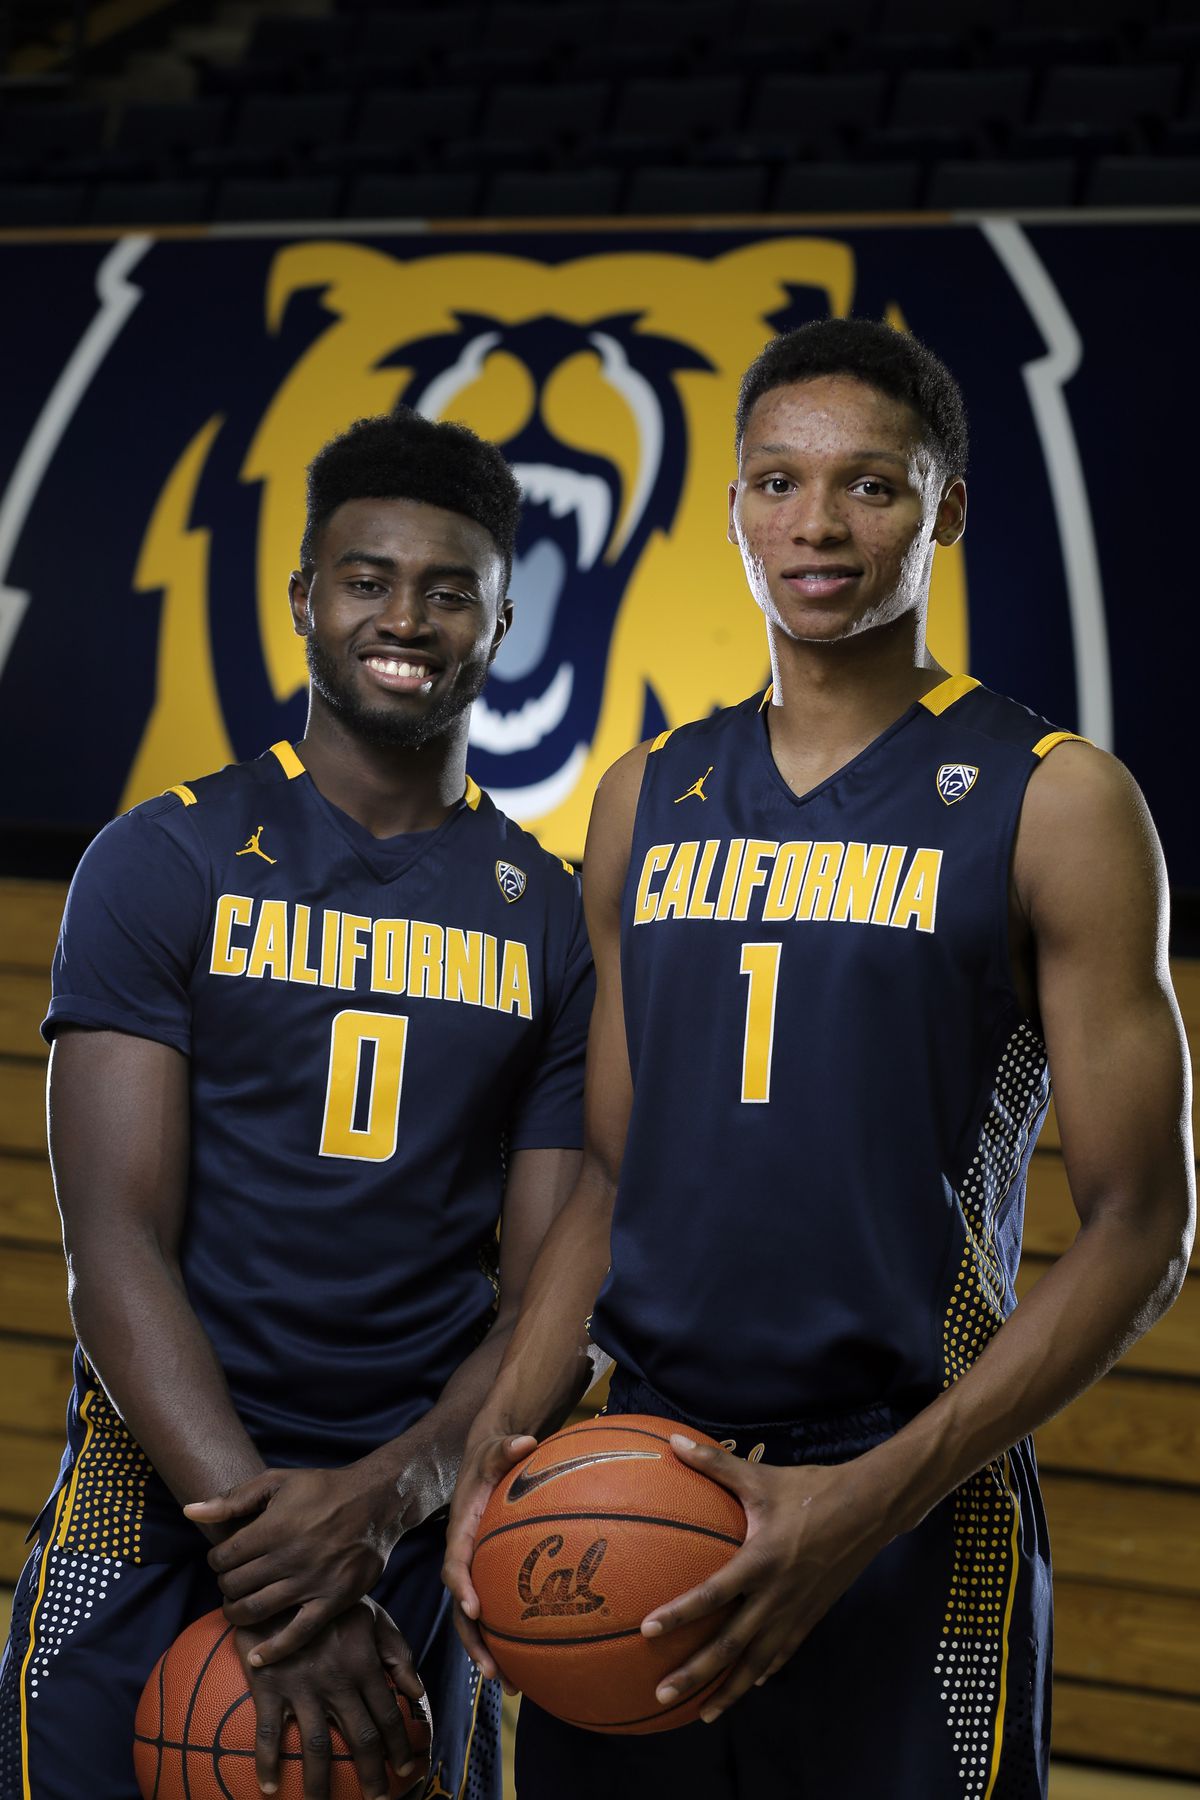 Cal basketball stars Jaylen Brown, left, and Ivan Rabb, right, at Haas Pavilion in Berkeley, Calif., on Wednesday, November 11, 2015